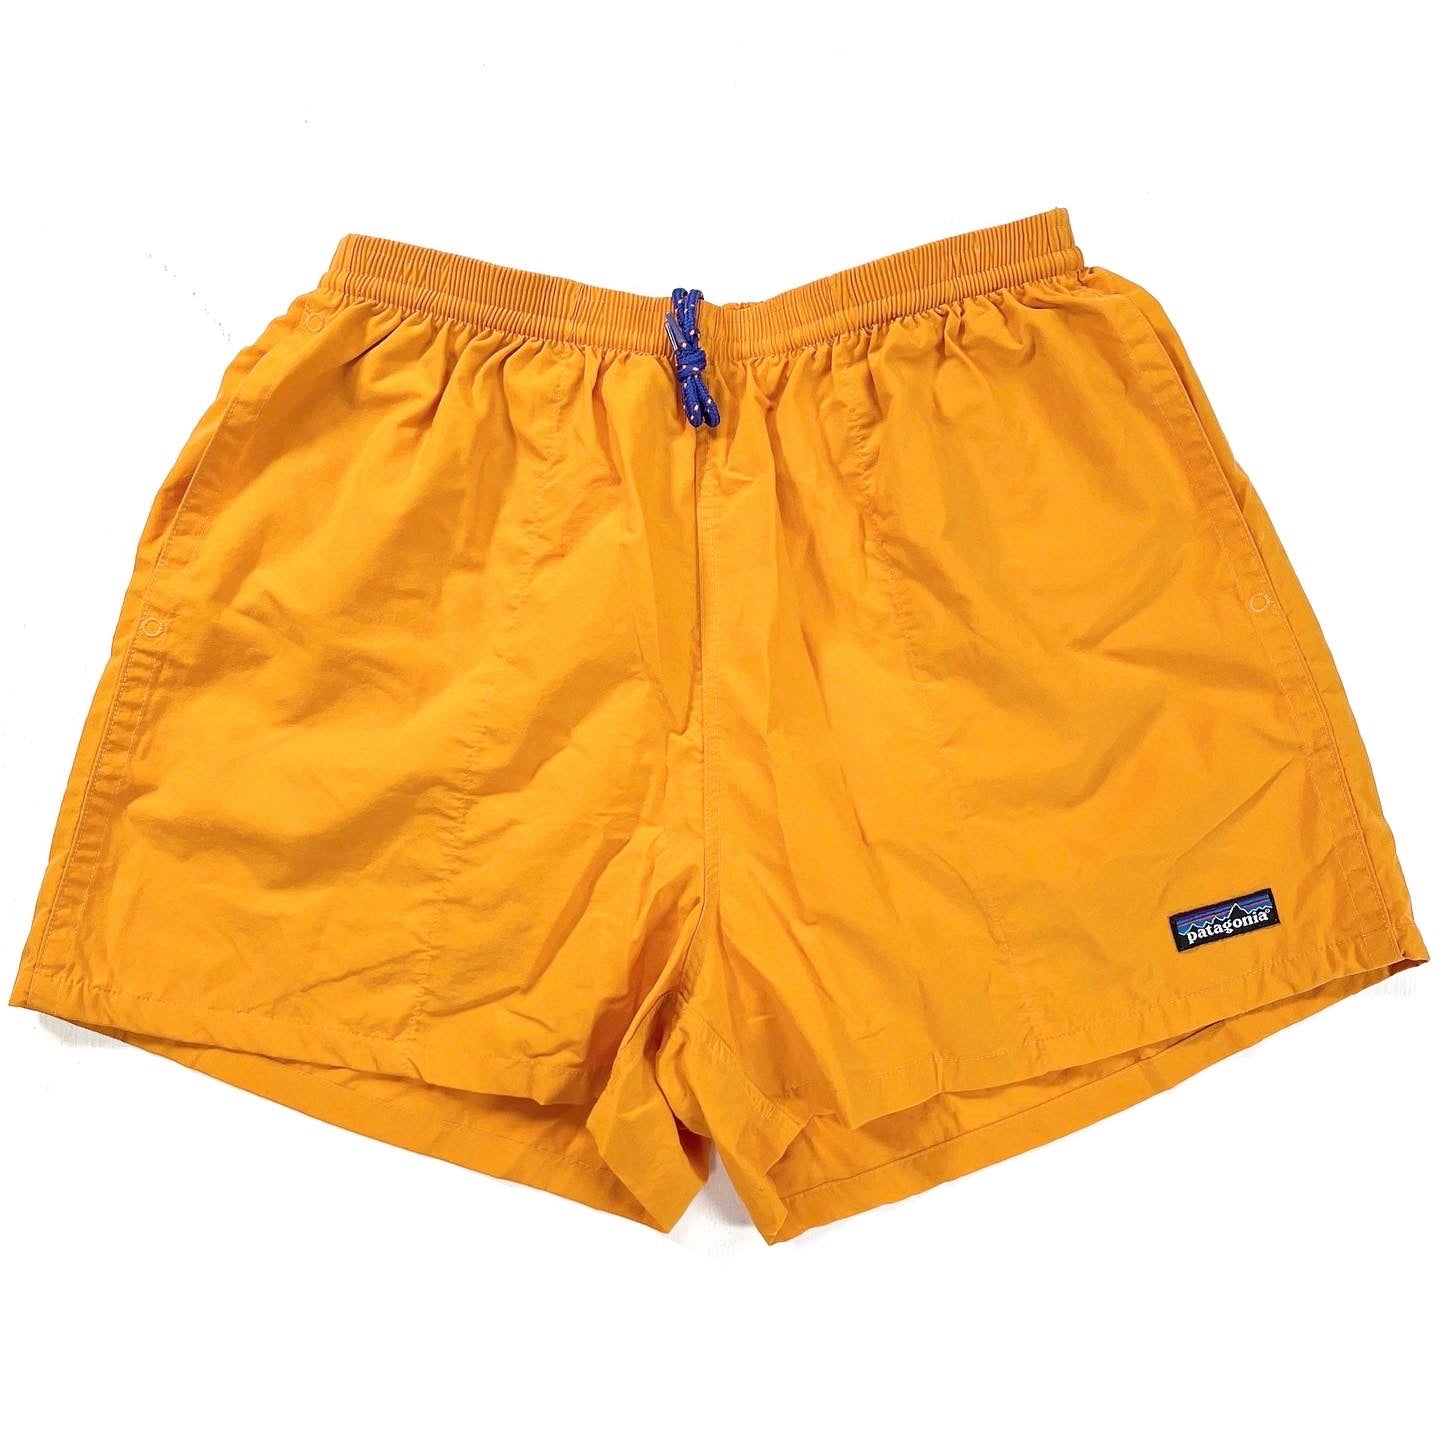 2001 Patagonia Mens 3.5” Baggies Shorts, Fiesta Orange (M)